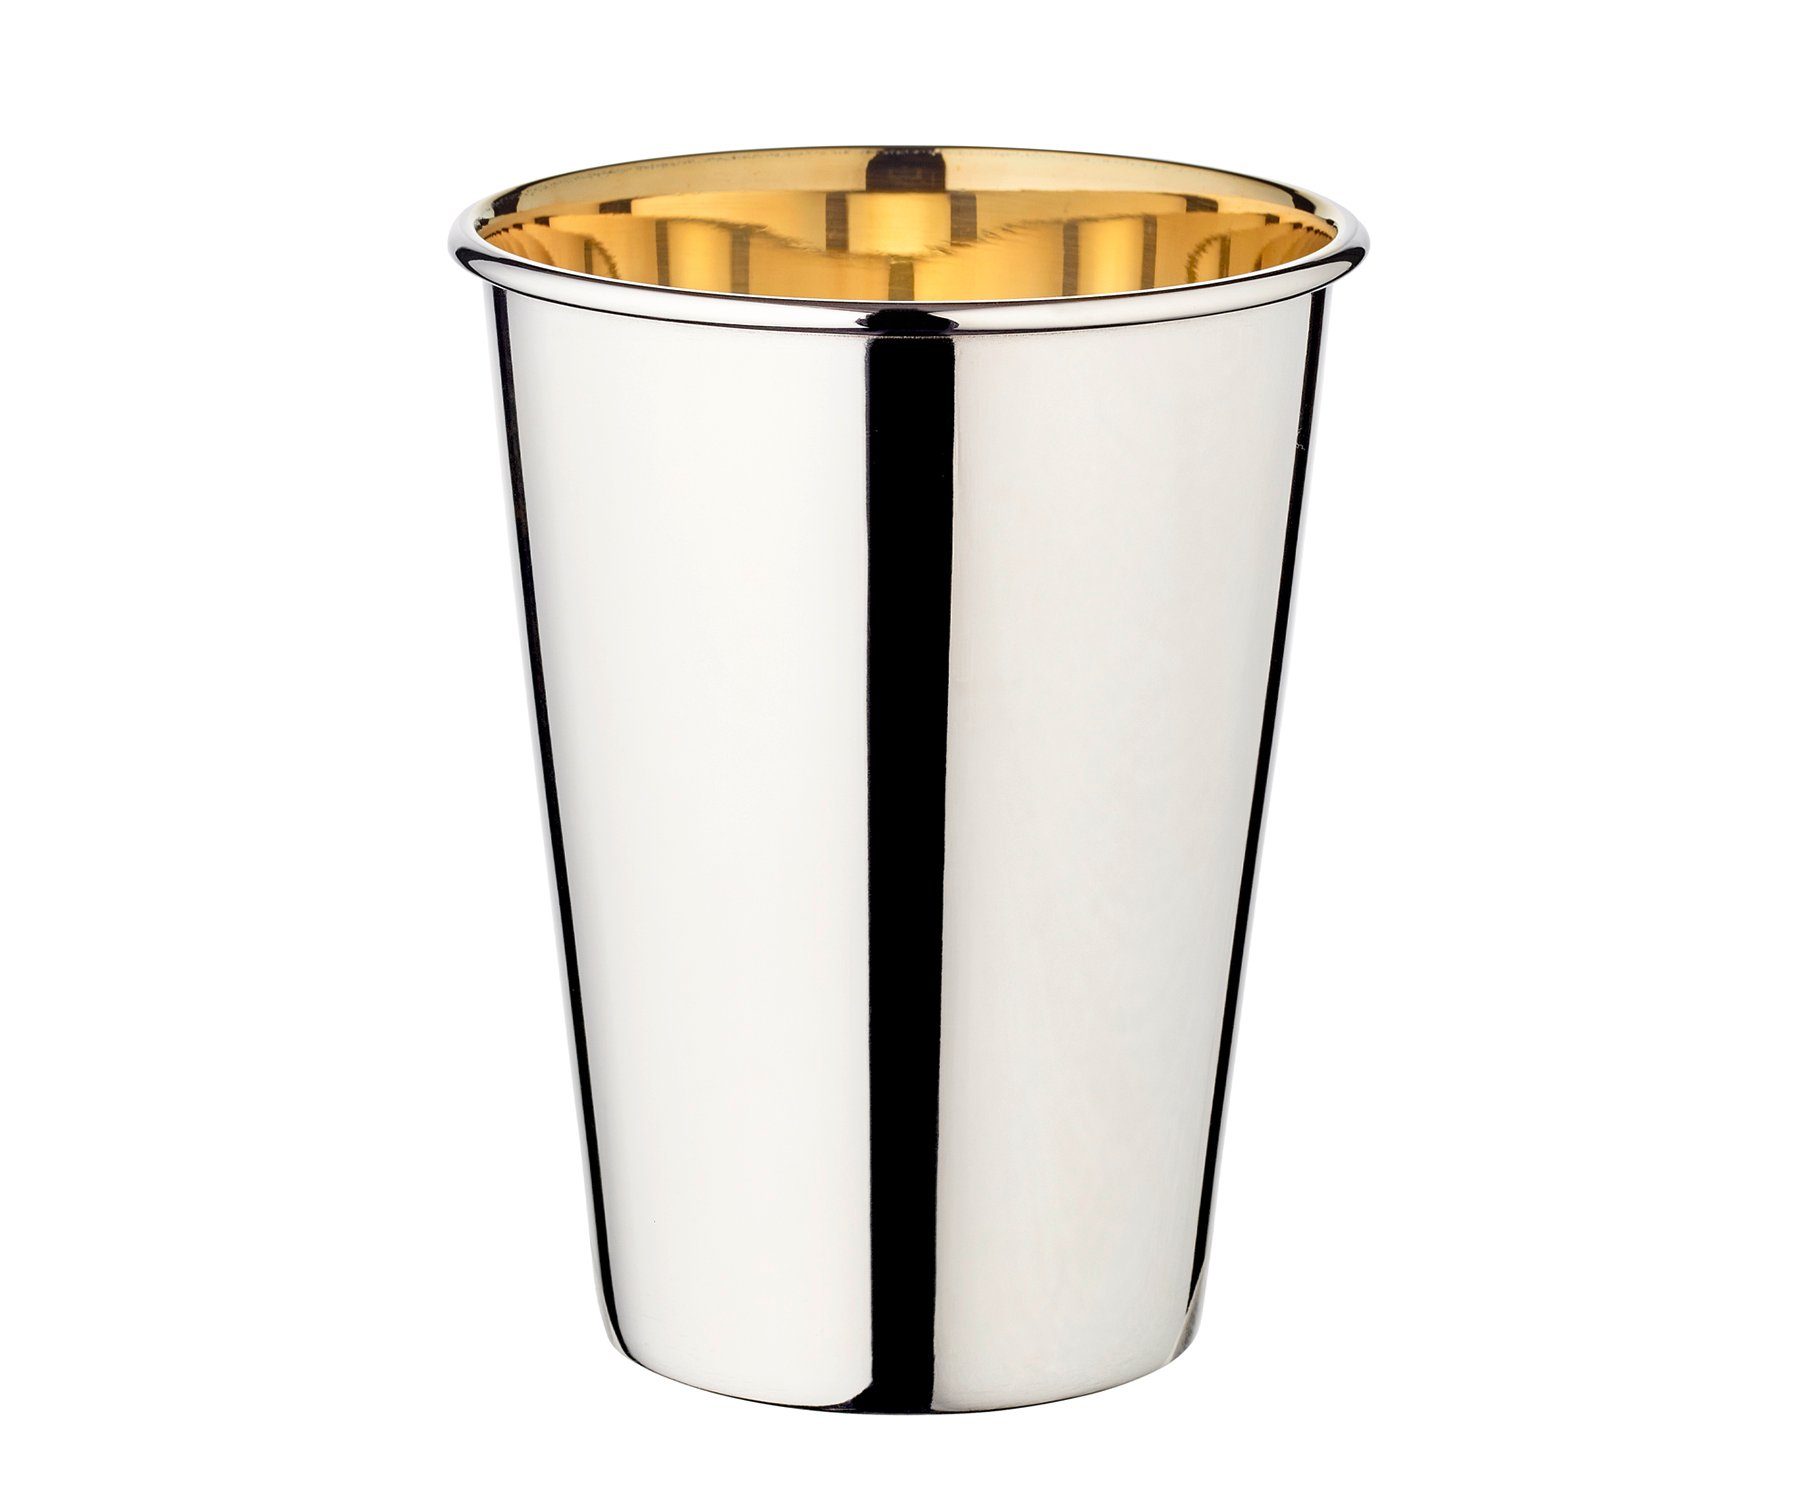 Messing, Silber-Optik, schwerversilbert, im Vase EDZARD mit Trinkbecher cleanen ml Becher gravurfähig, Design, 300 Salta,